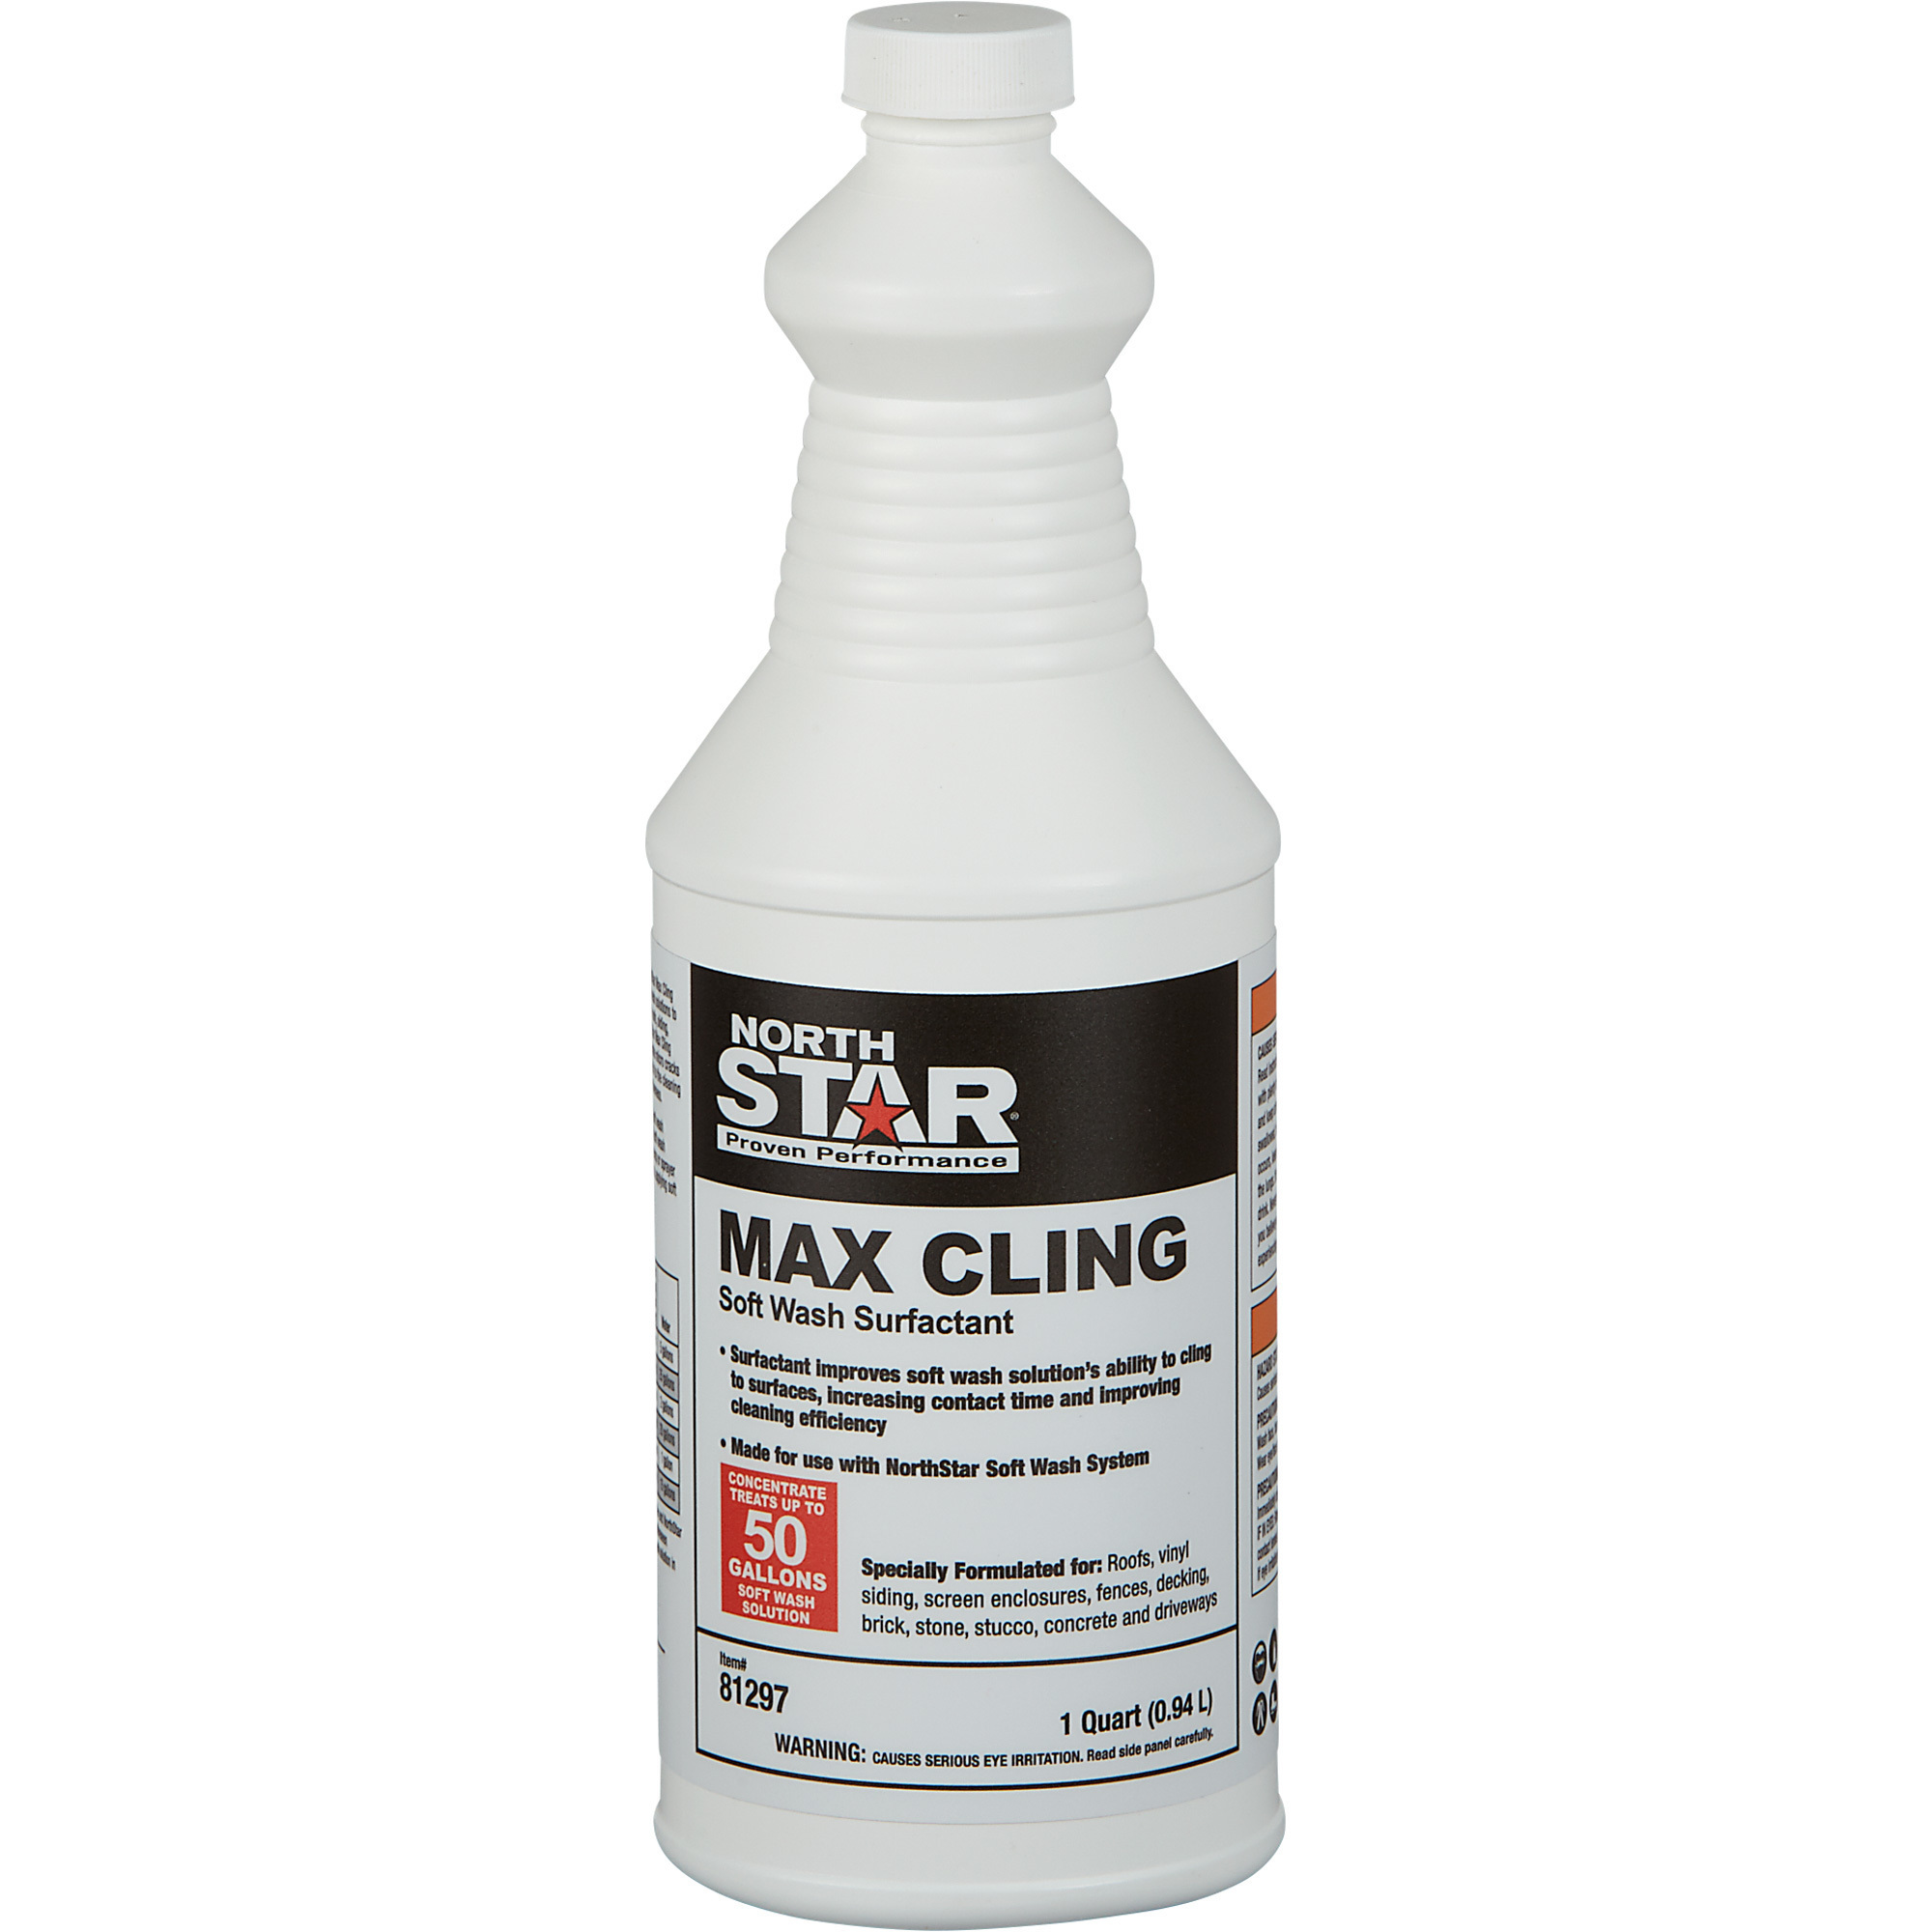 NorthStar Max Cling Soft Wash Surfactant â 1 Quart